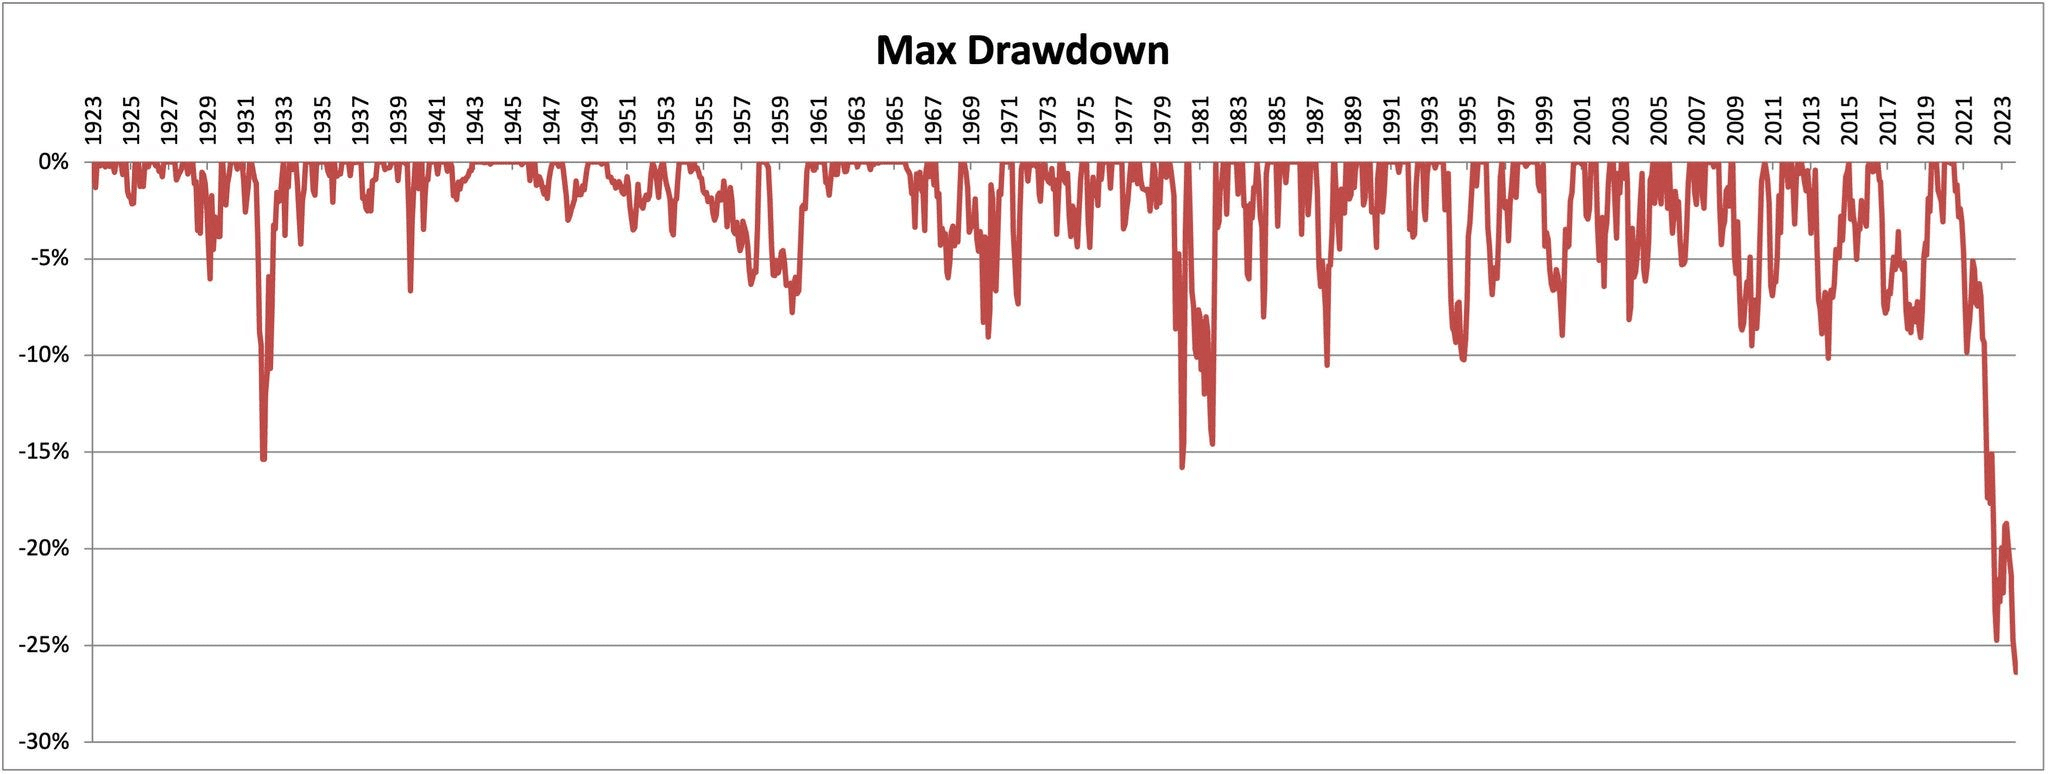 Max Drawdown